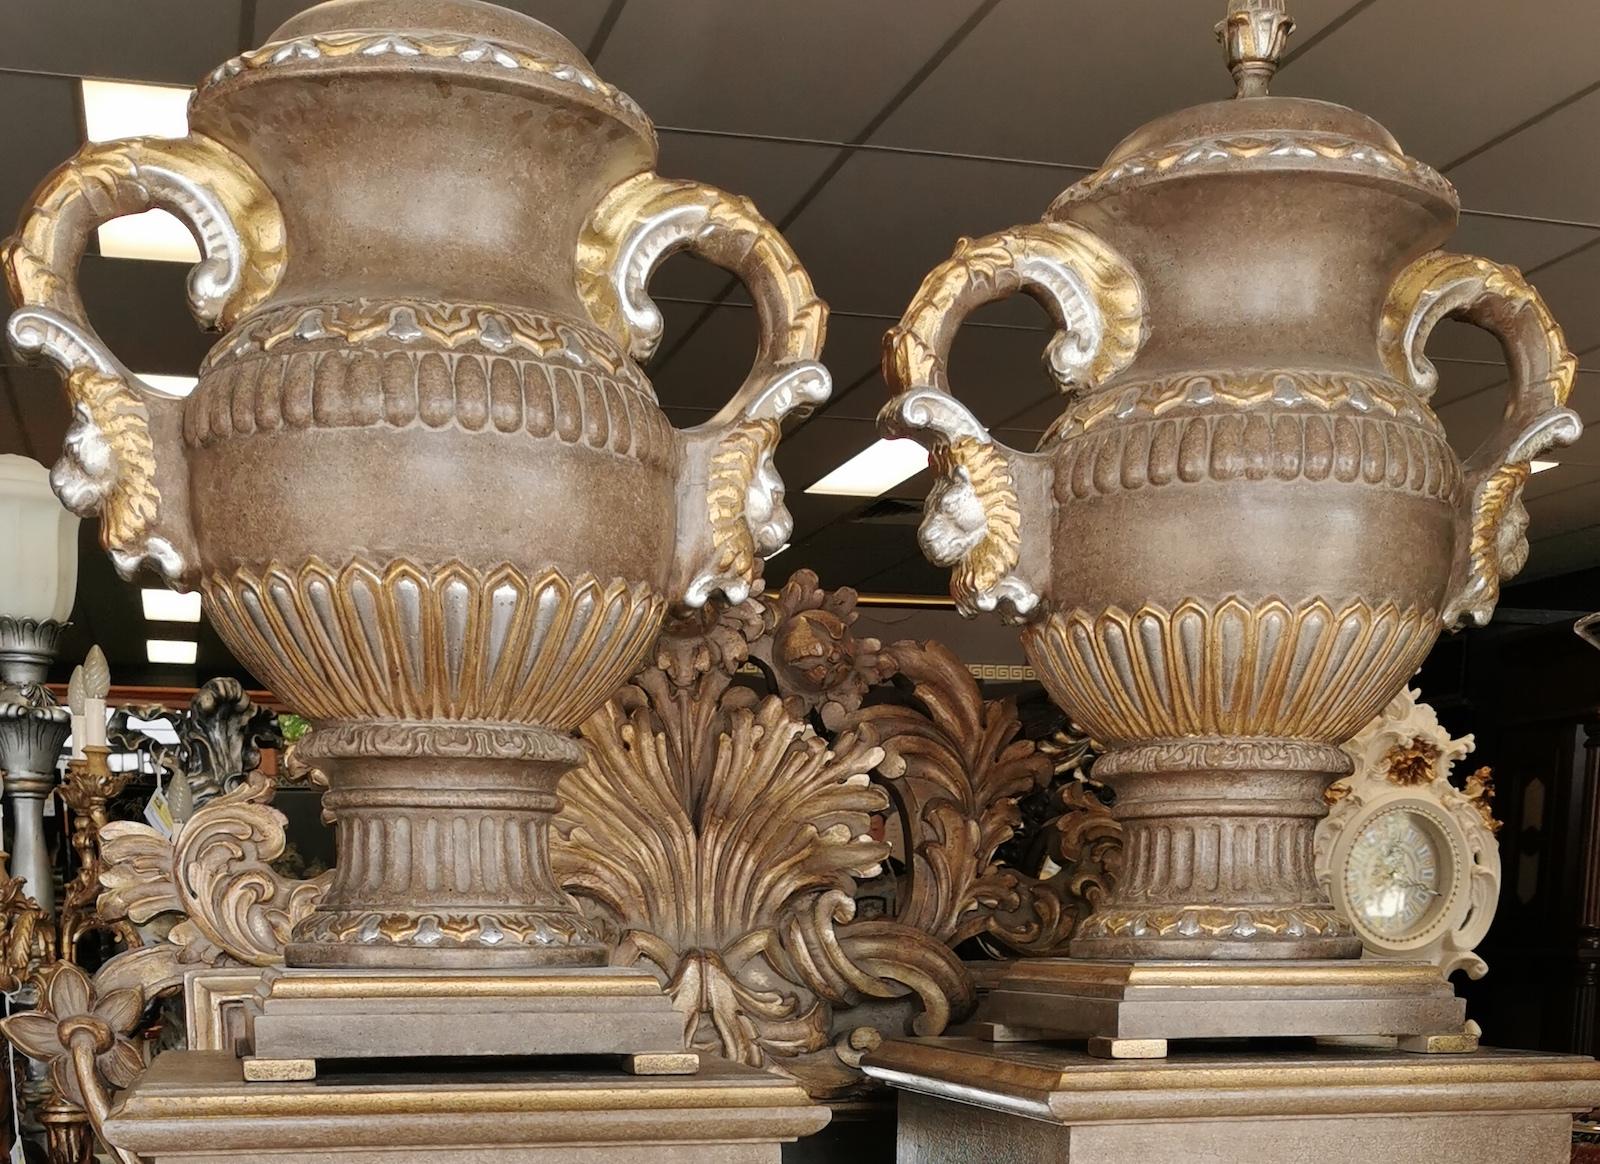 Pair of painted wooden pedestals with ceramic urns,
total height 210cm,
pedestals 43 x 138cm high,
urns 35 x 59 x 73cm high.